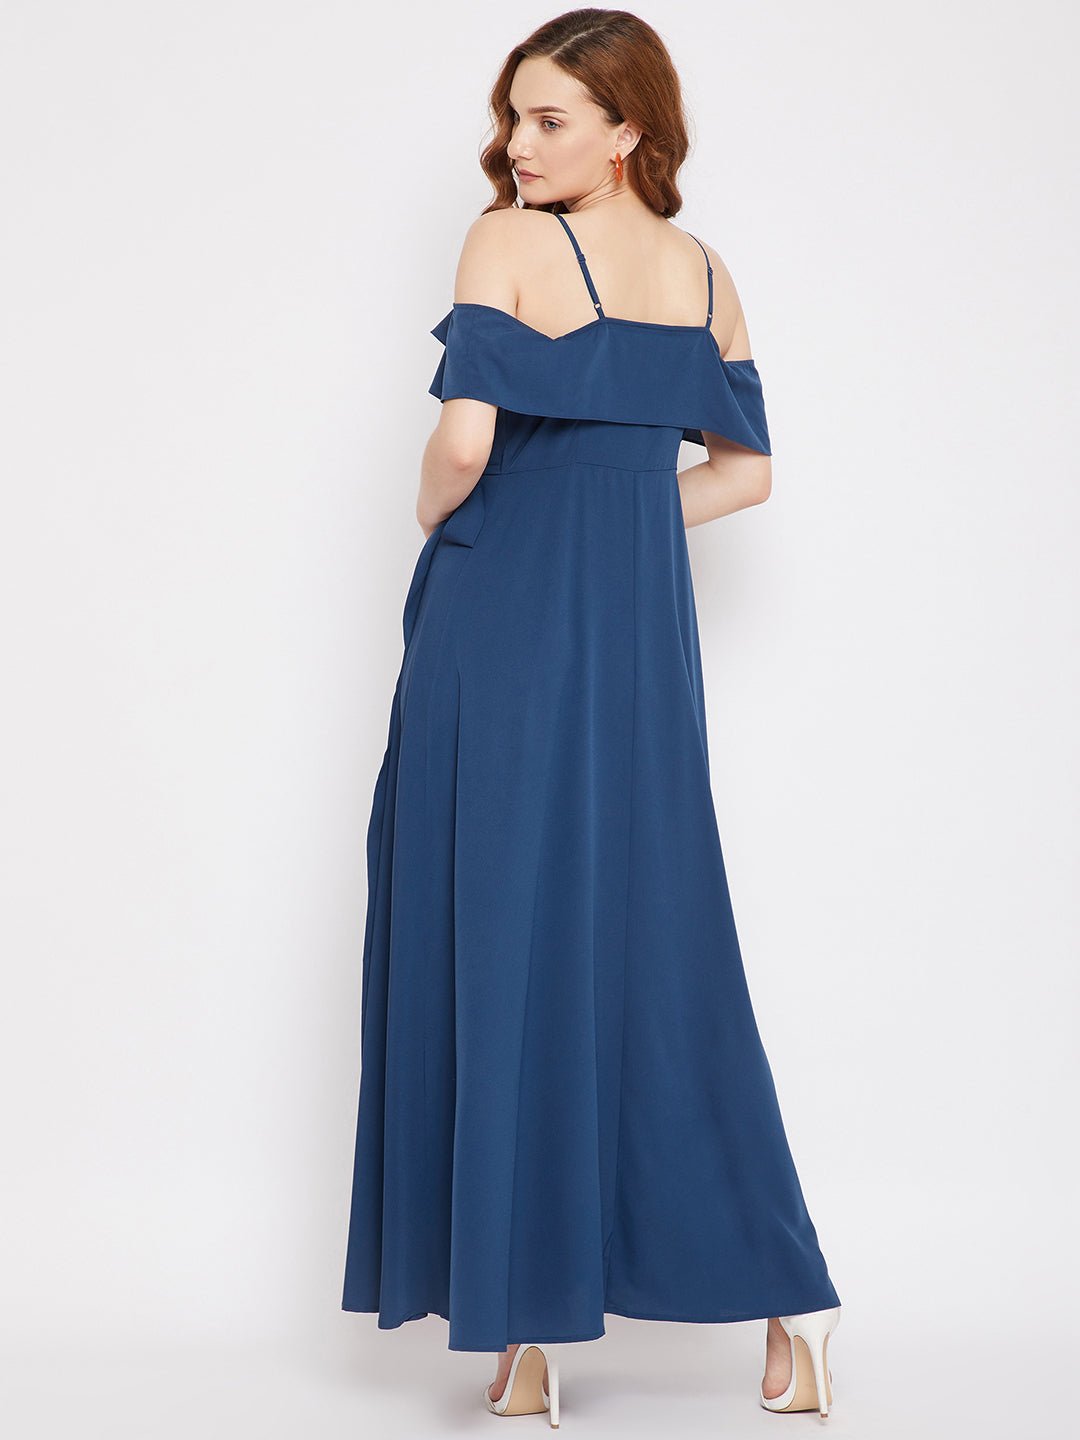 Folk Republic Women Solid Blue V-Neck Cold-Shoulder Thigh-High Slit Ruffled Maxi Dress - #folk republic#